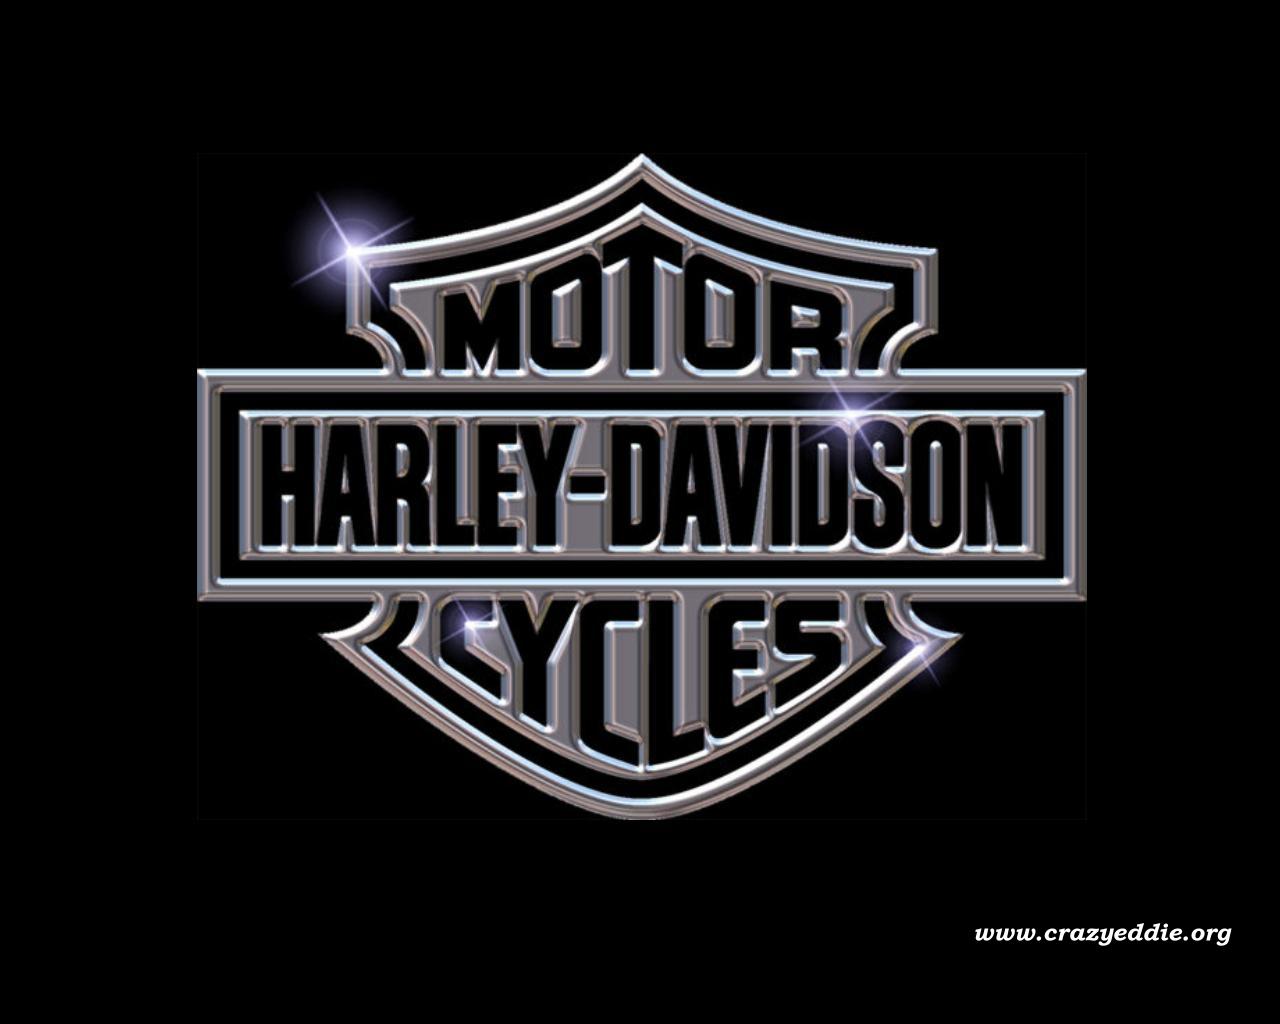 Full HD Wallpaper harley davidson, vehicles, harley davidson logo, logo